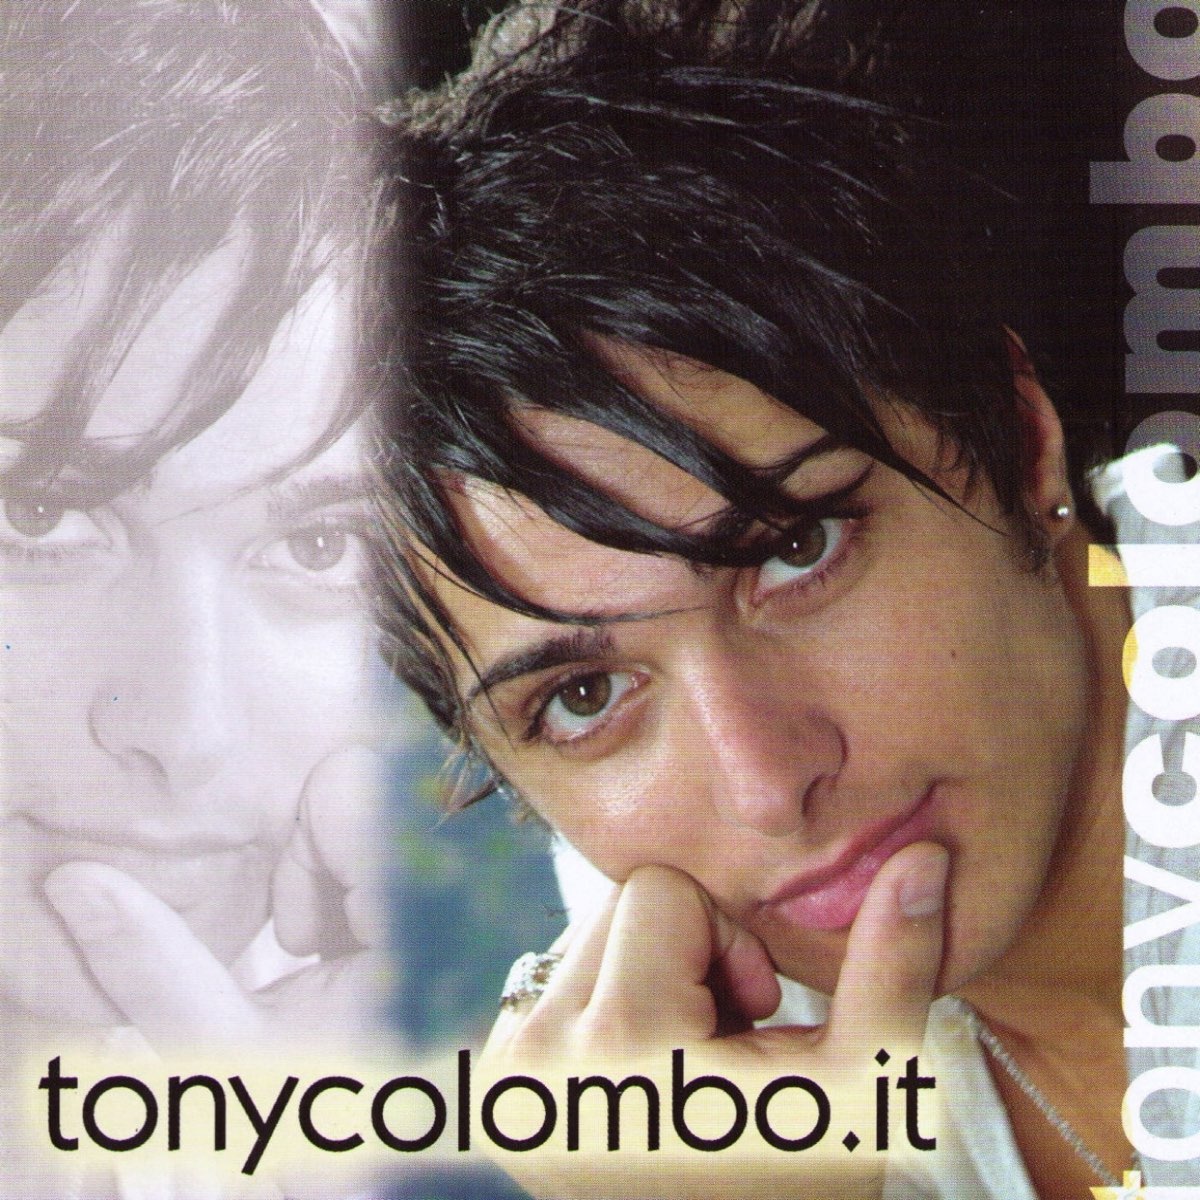 Tony Colombo.it – Album von Tony Colombo – Apple Music